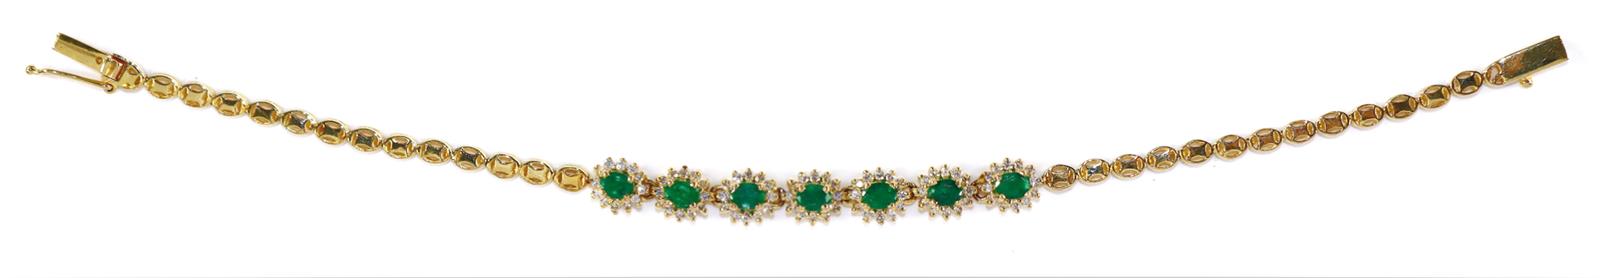 Smaragd-, Brillantarmband. | Bild Nr.1